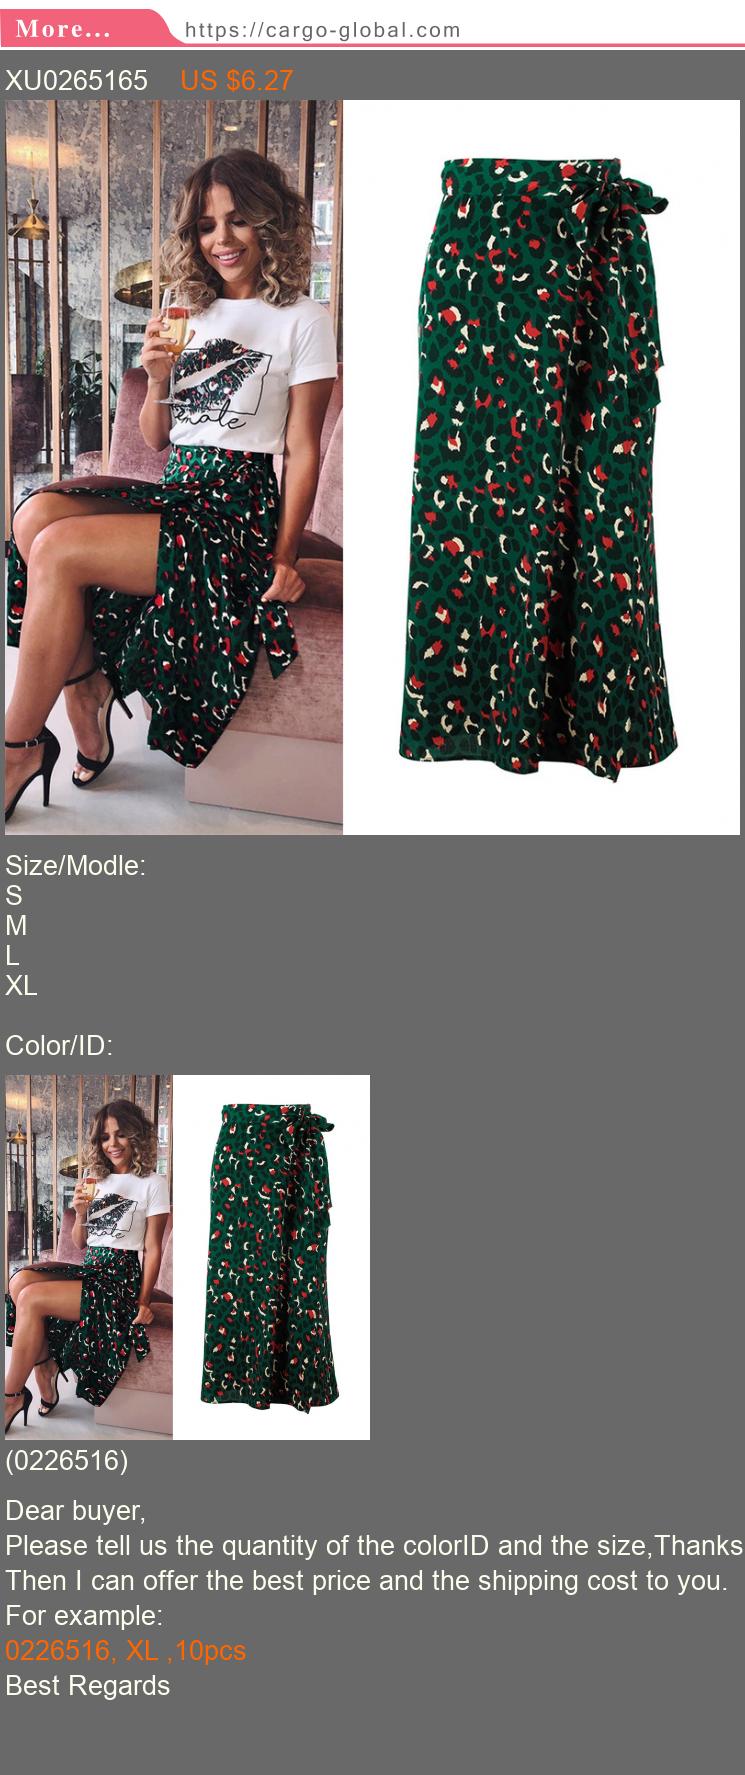 Women's Pencil skirt 2019 New Cartoon Mouse Print High Waist Slim Skirts Young Girl Summer Large Size Japan Female Falda